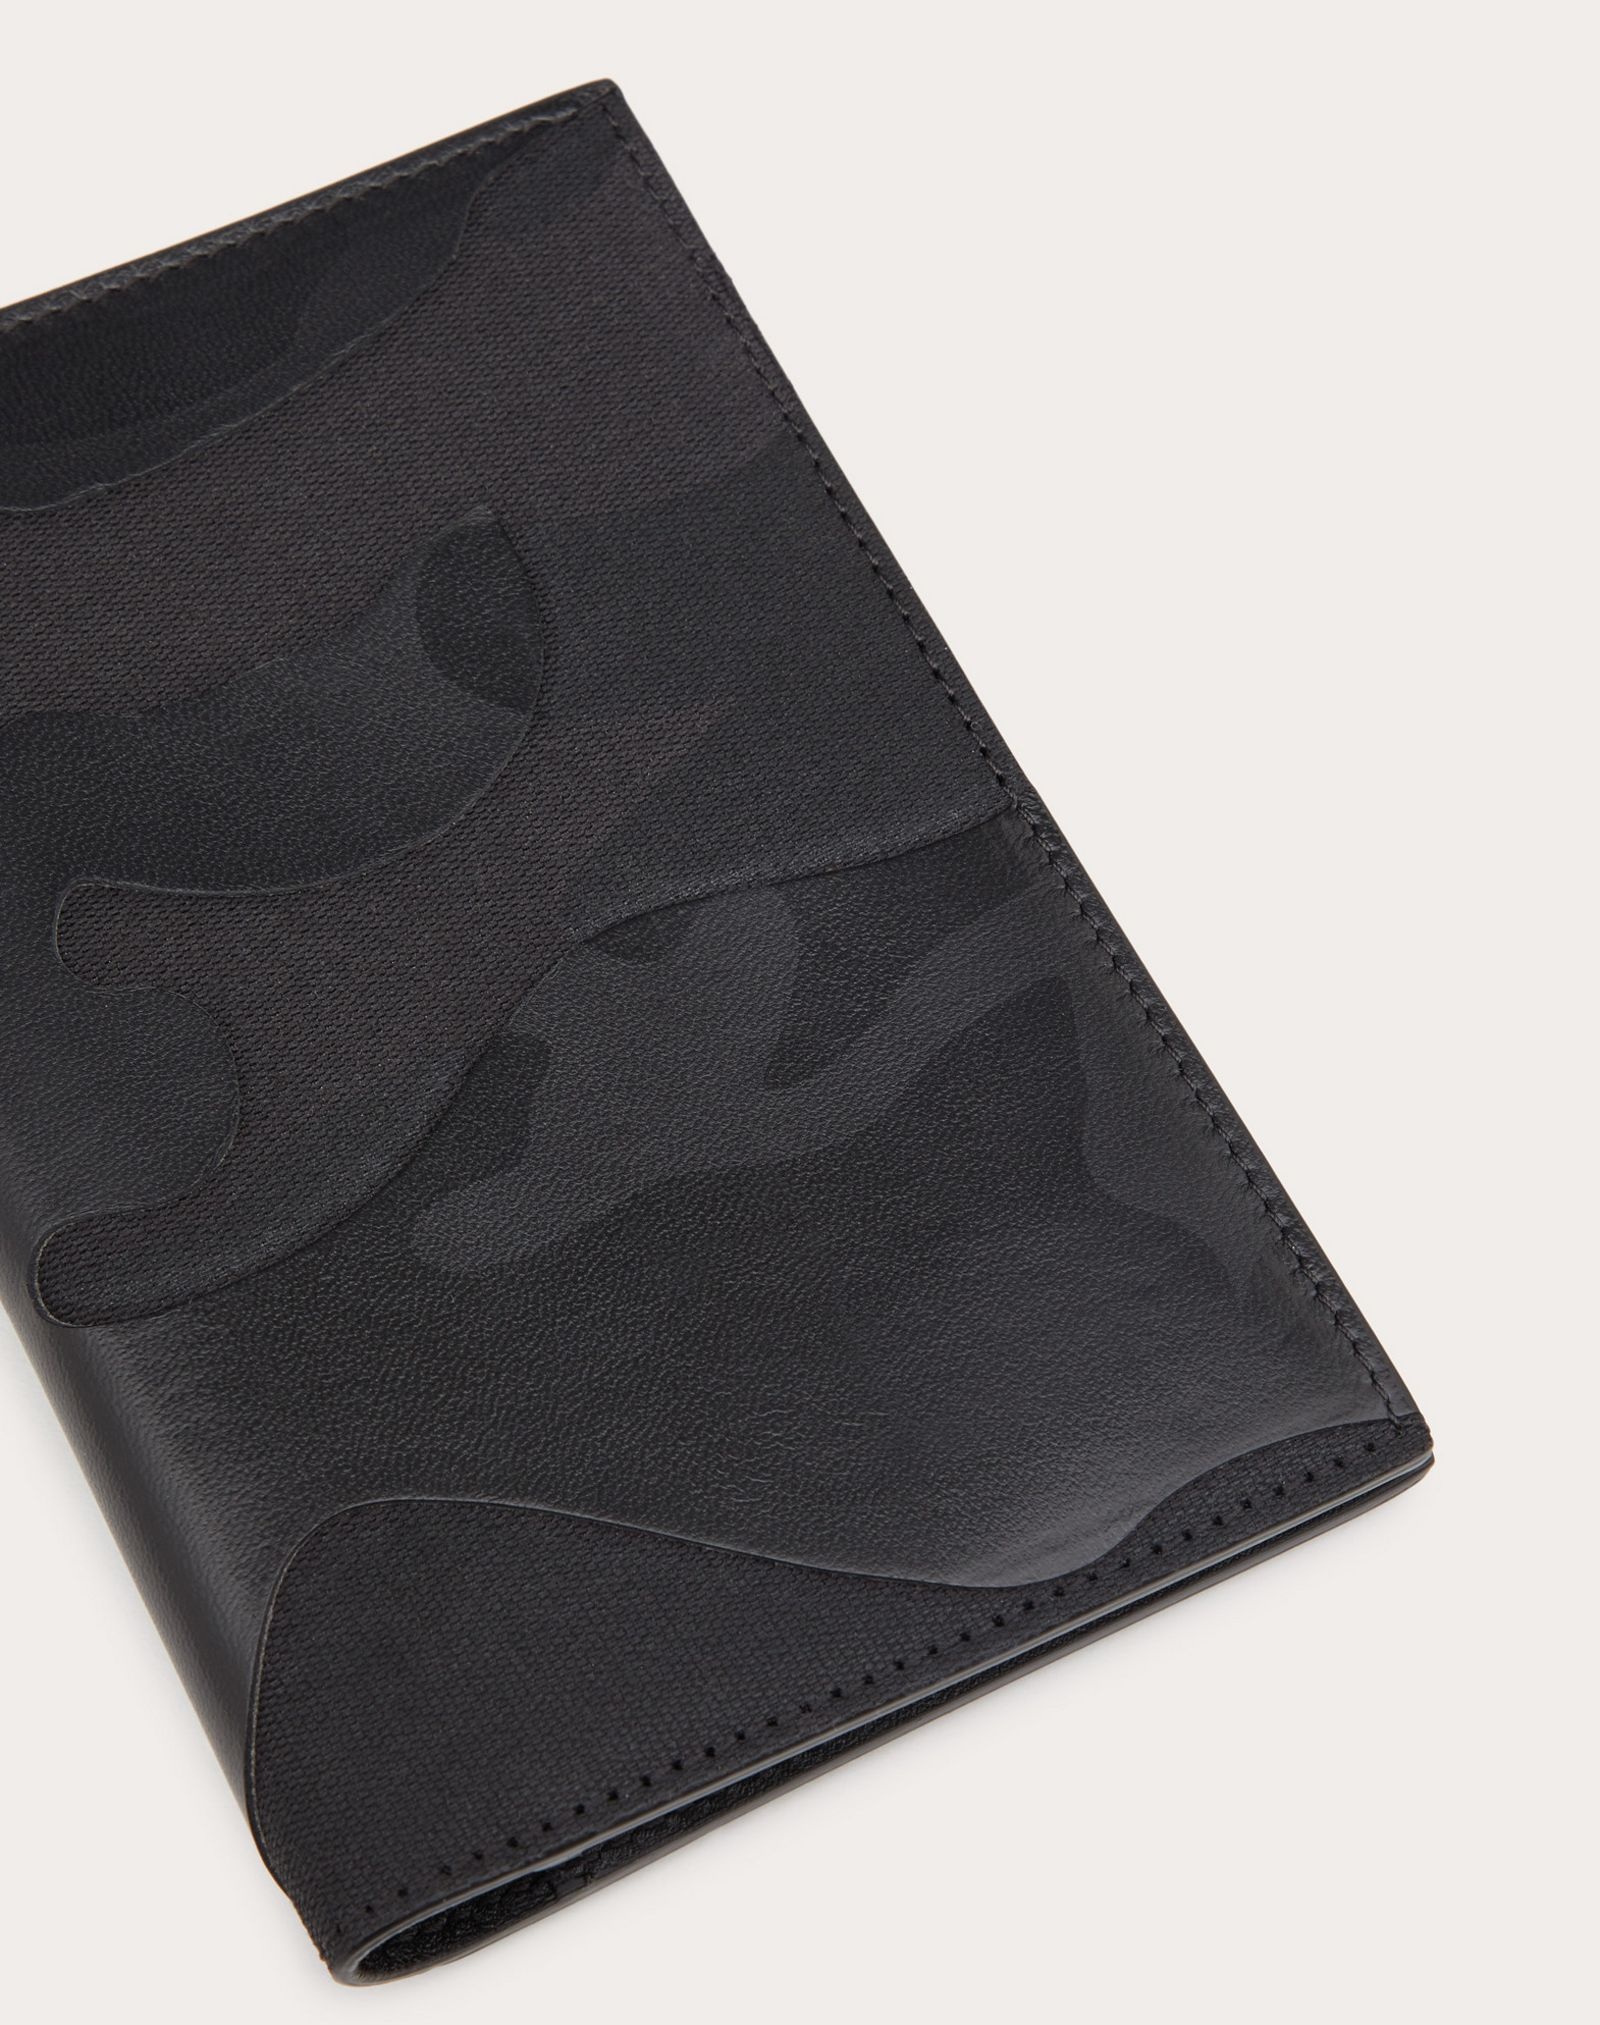 Camouflage Noir Passport Cover - 2